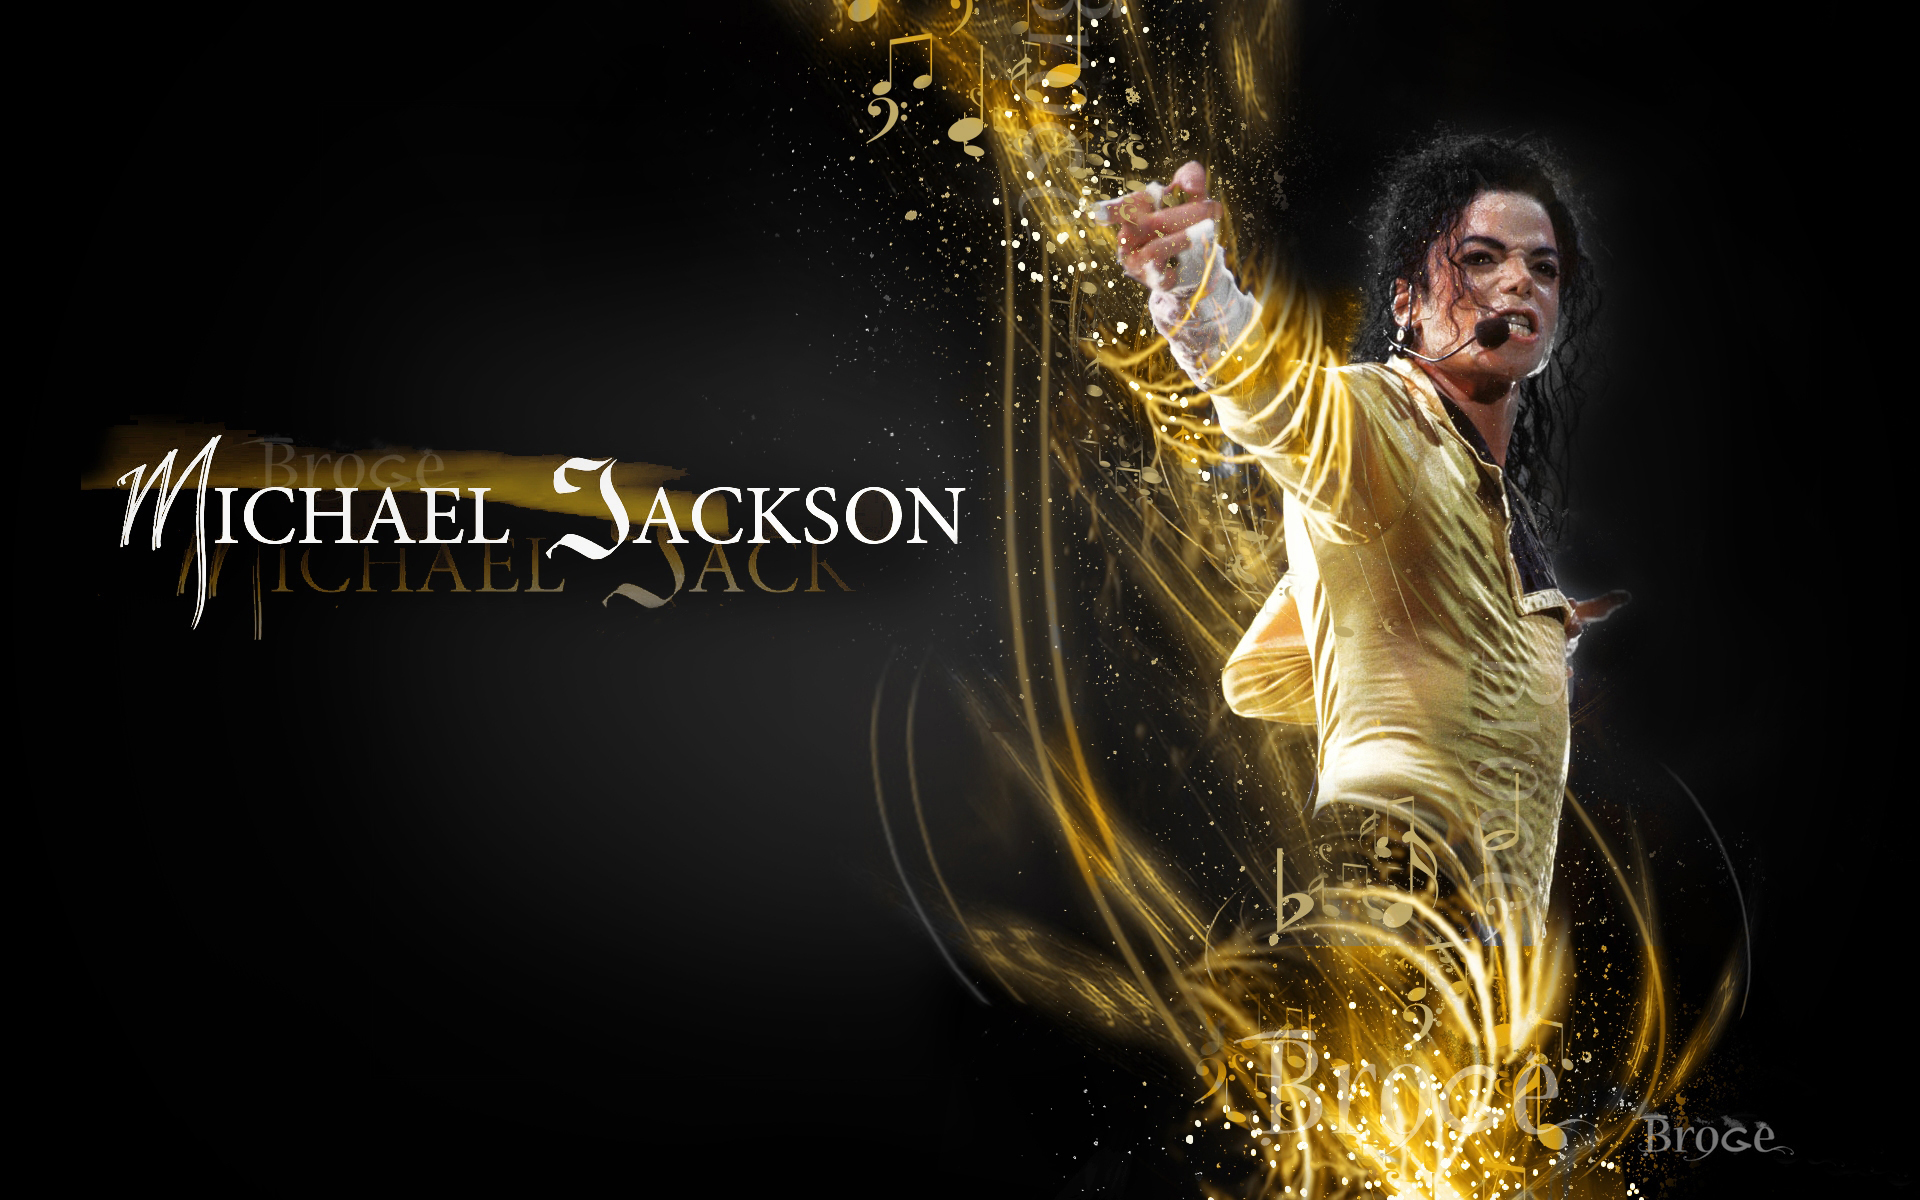 Tribute To Michael Jackson iPhone 5 Wallpaper  Michael jackson wallpaper, Michael  jackson images, Michael jackson's songs